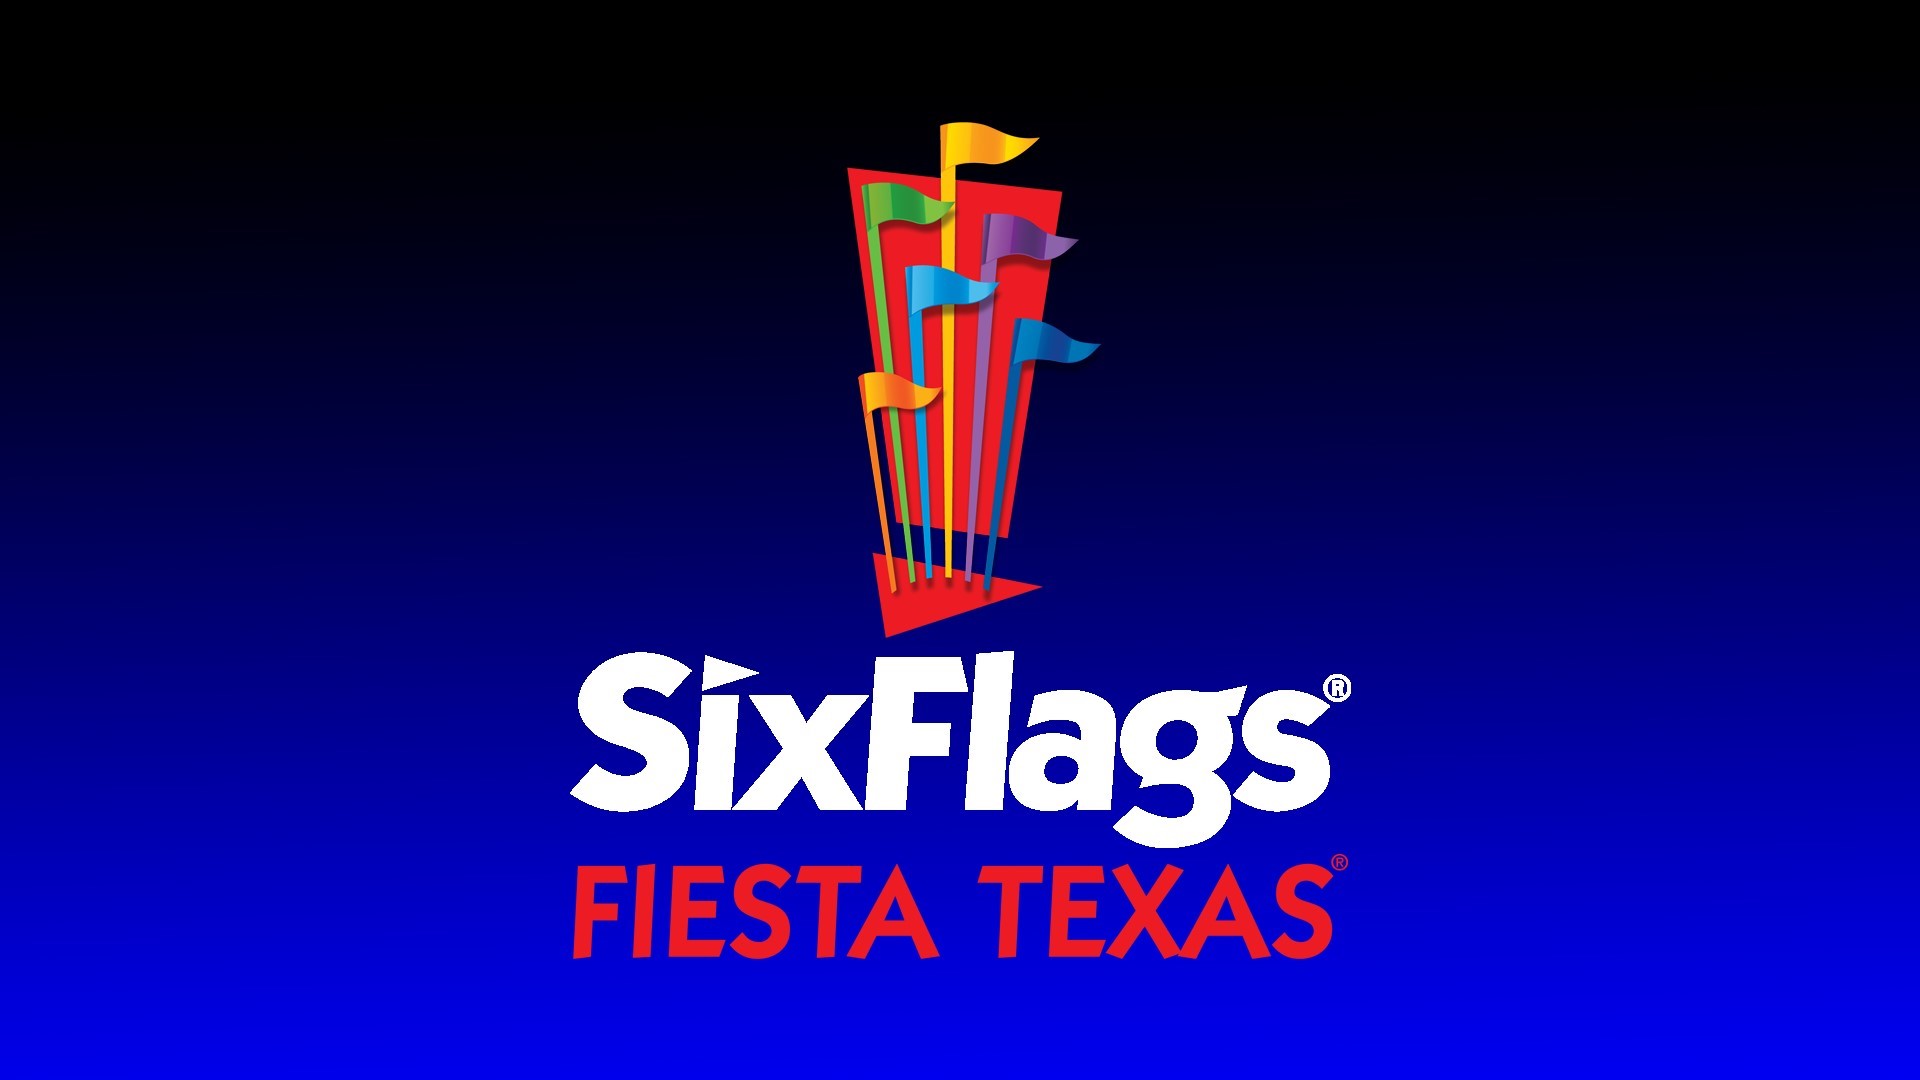 SkyScreamer at Six Flags Fiesta Texas closed after alert | kens5.com